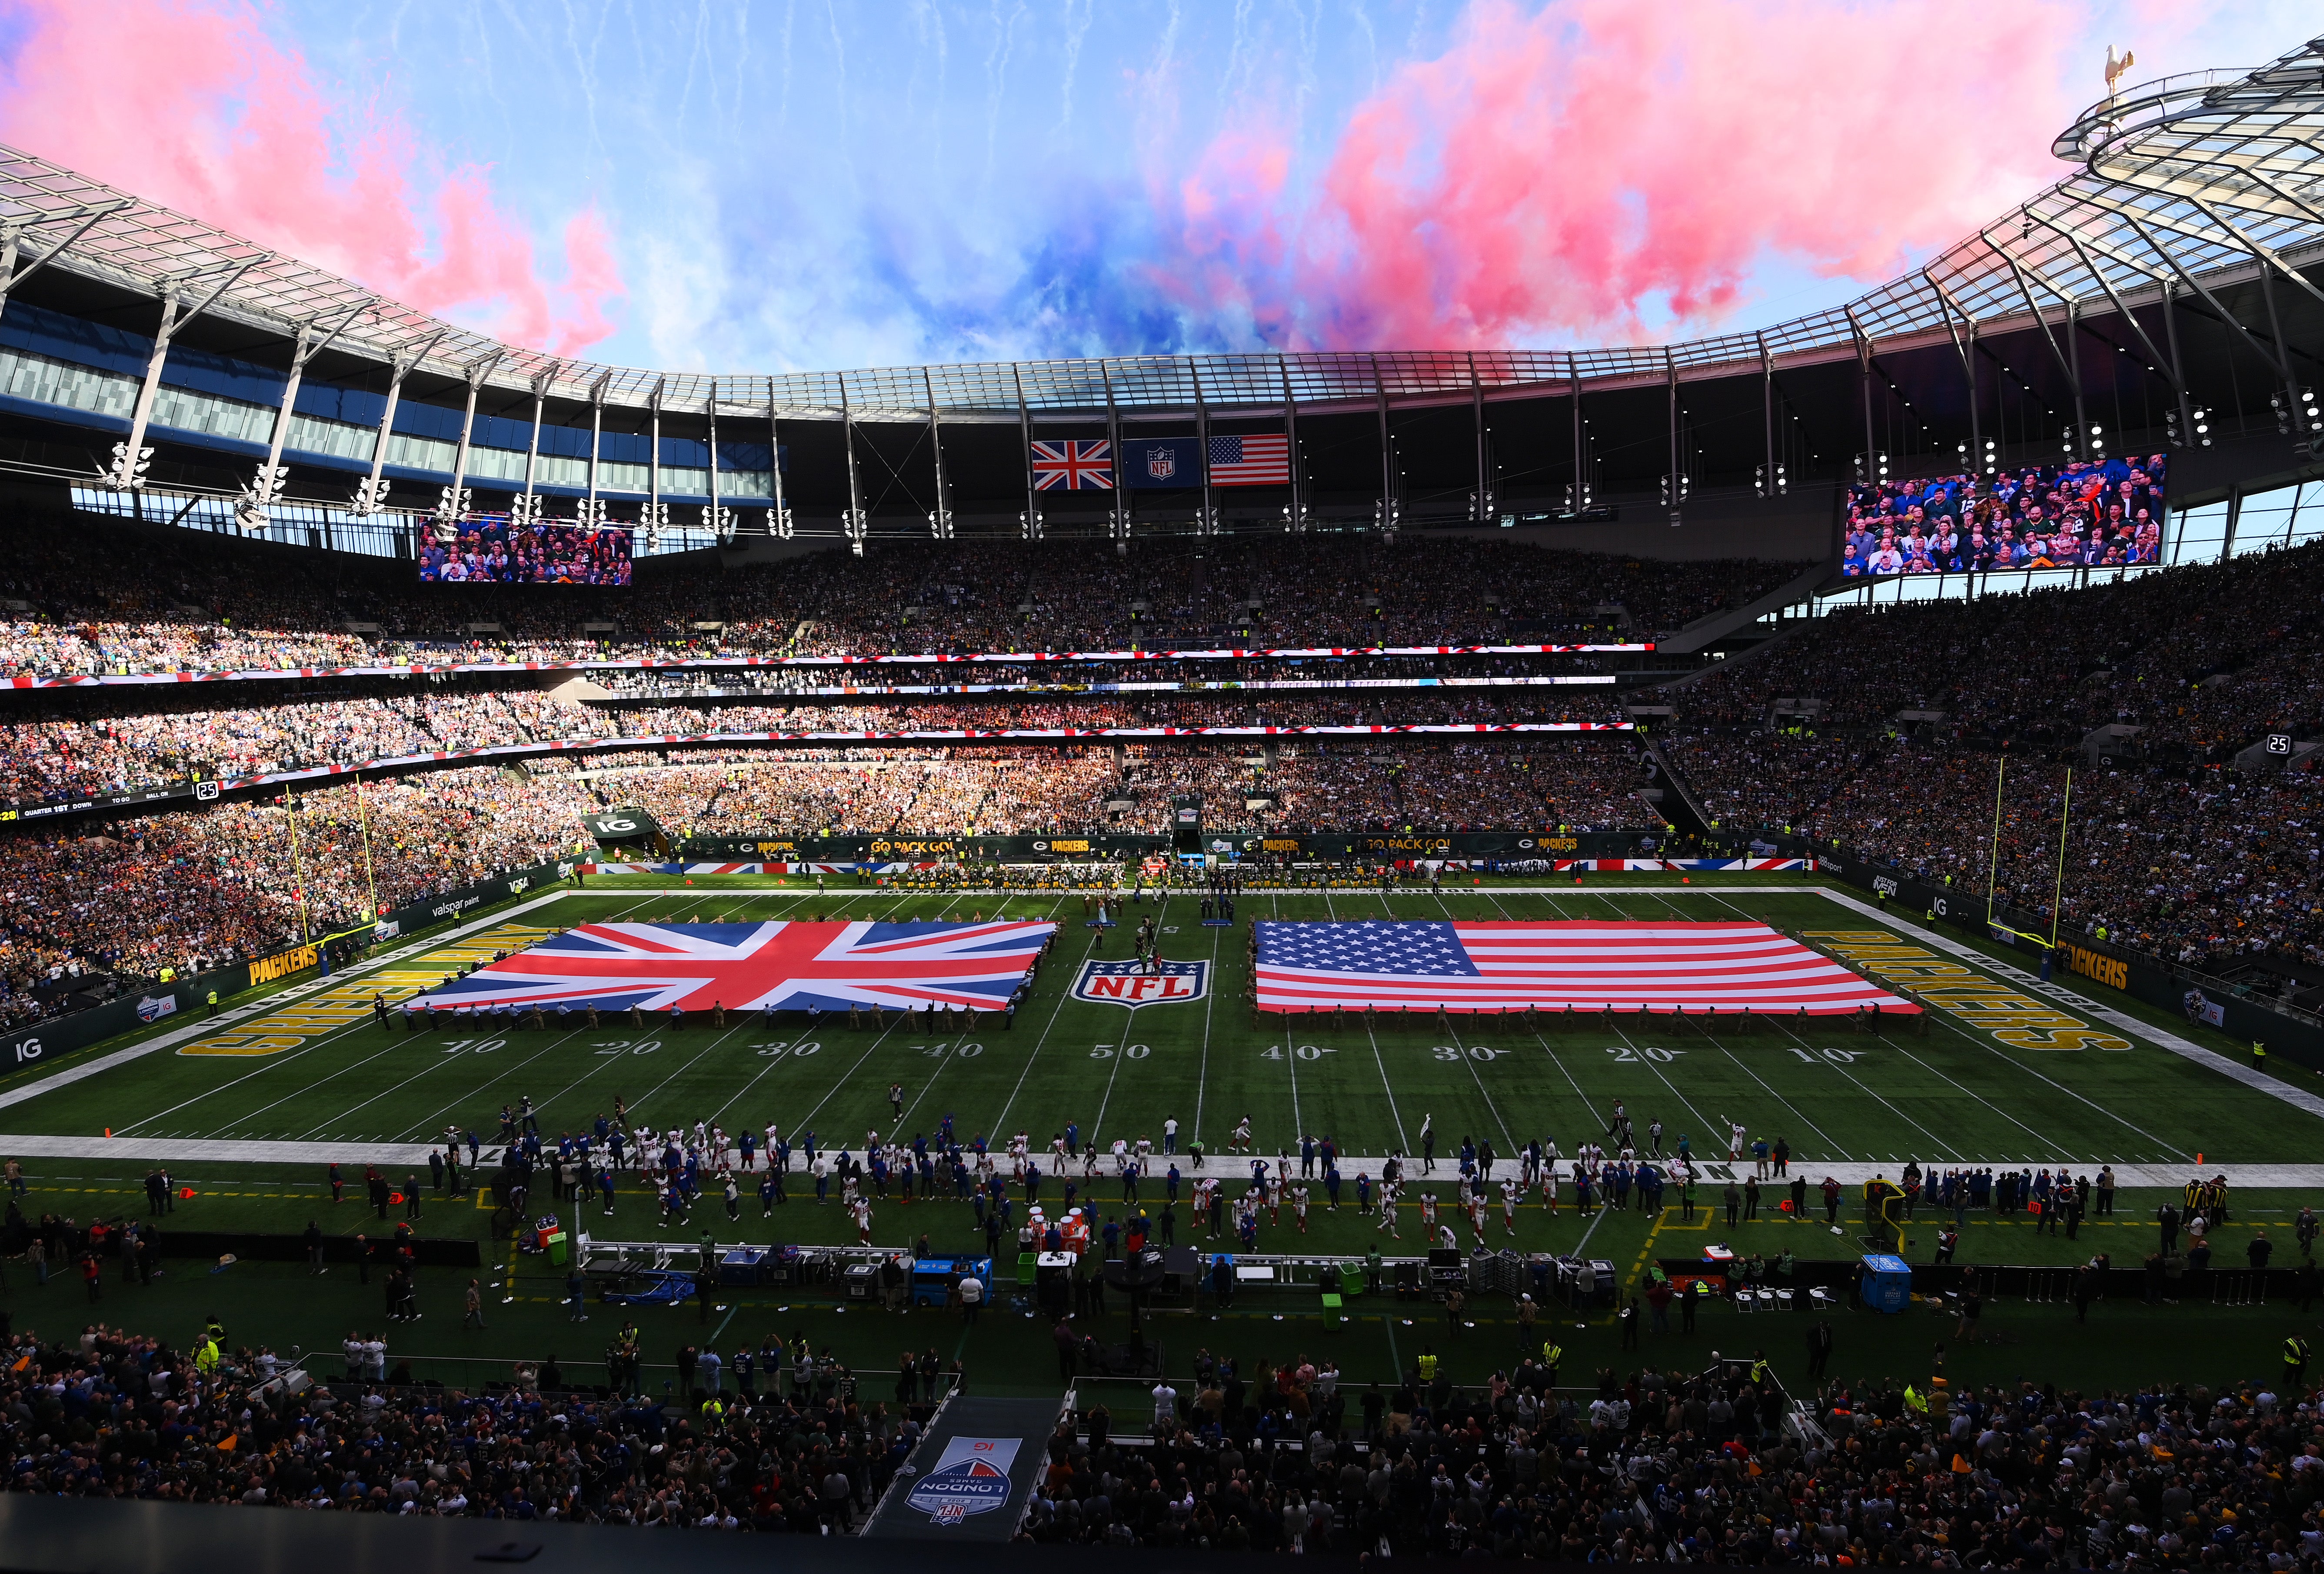 Tottenham Hotspur Stadium hosts Green Bay Packers vs New York Giants on Sunday